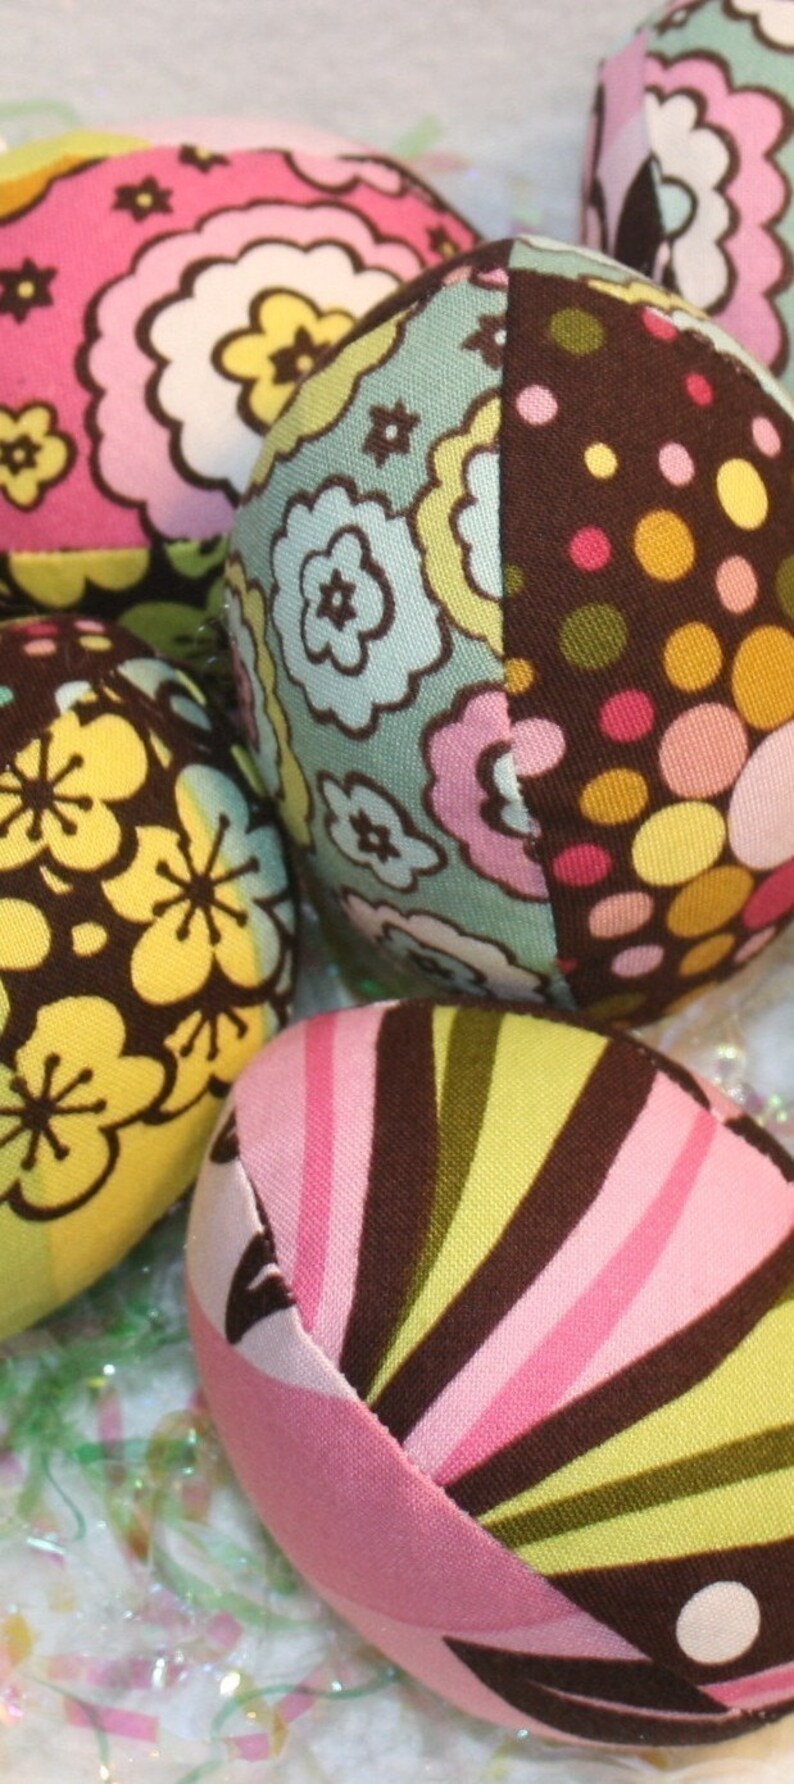 Handmade Fabric Easter Eggs, Easter Decoration, Stuffed Cloth Easter Eggs, Chocolate Lollipop, Children's Basket Filler, 6 eggs total image 3